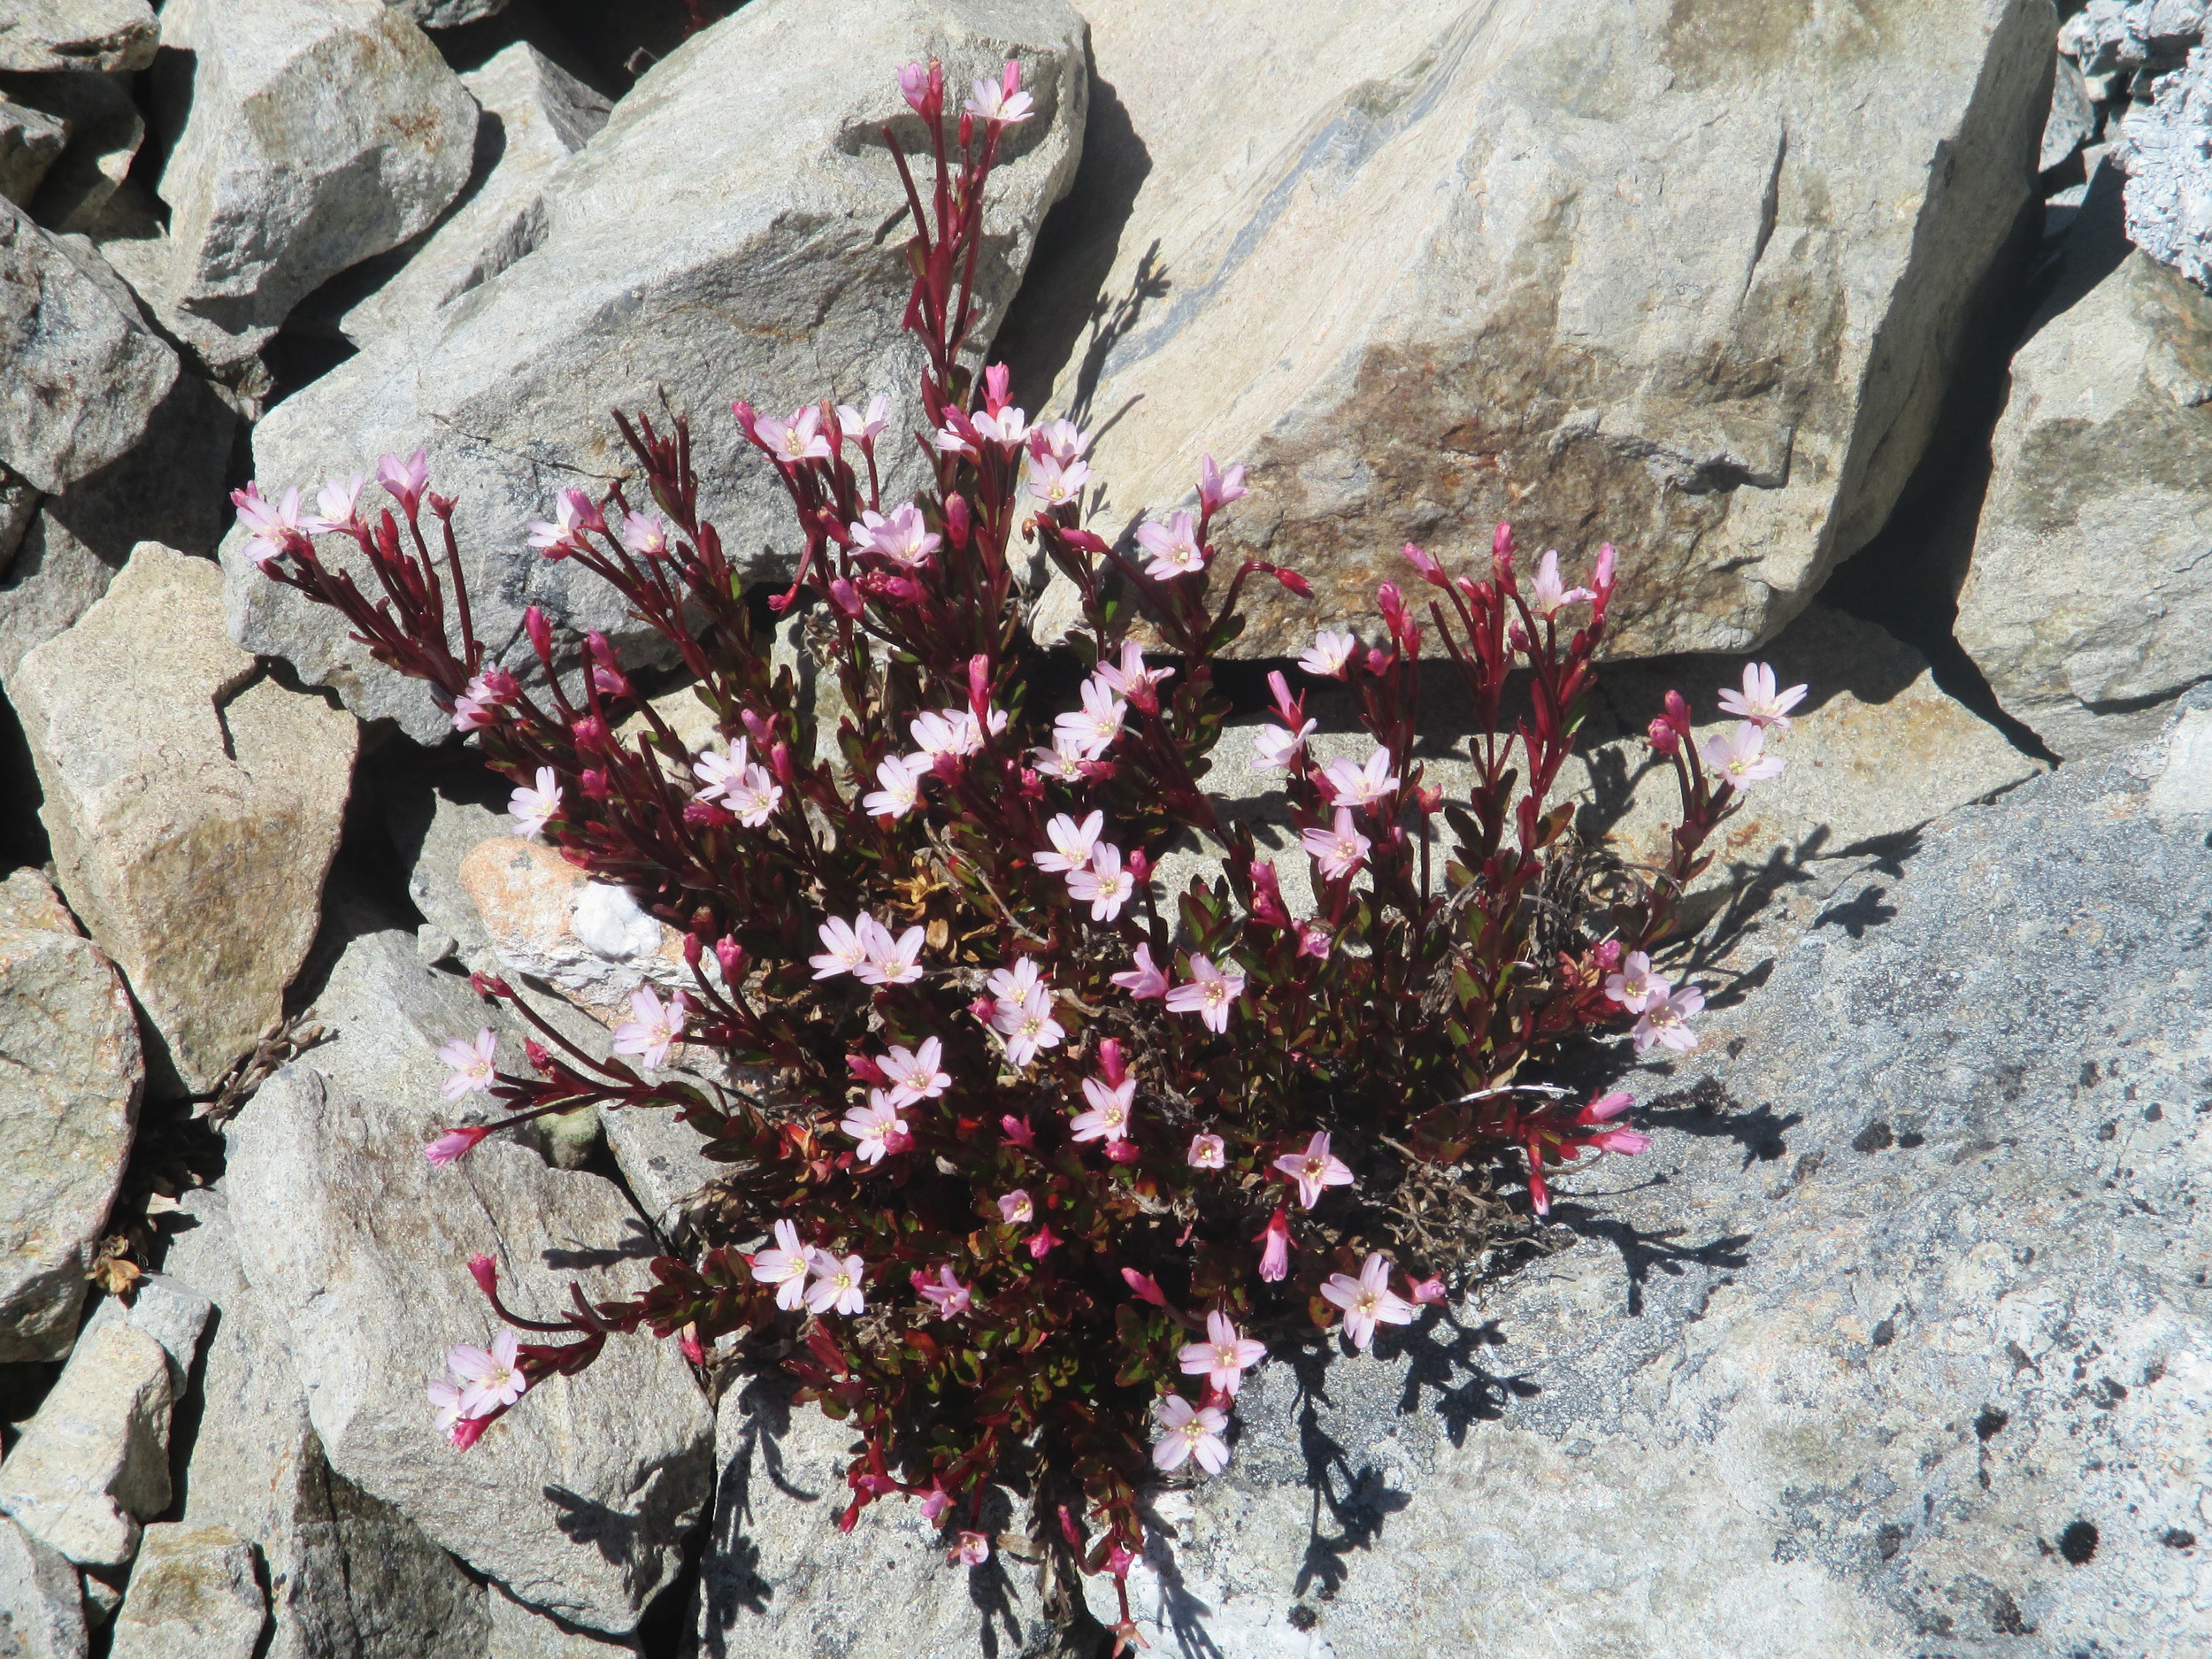   Alpine bloom   